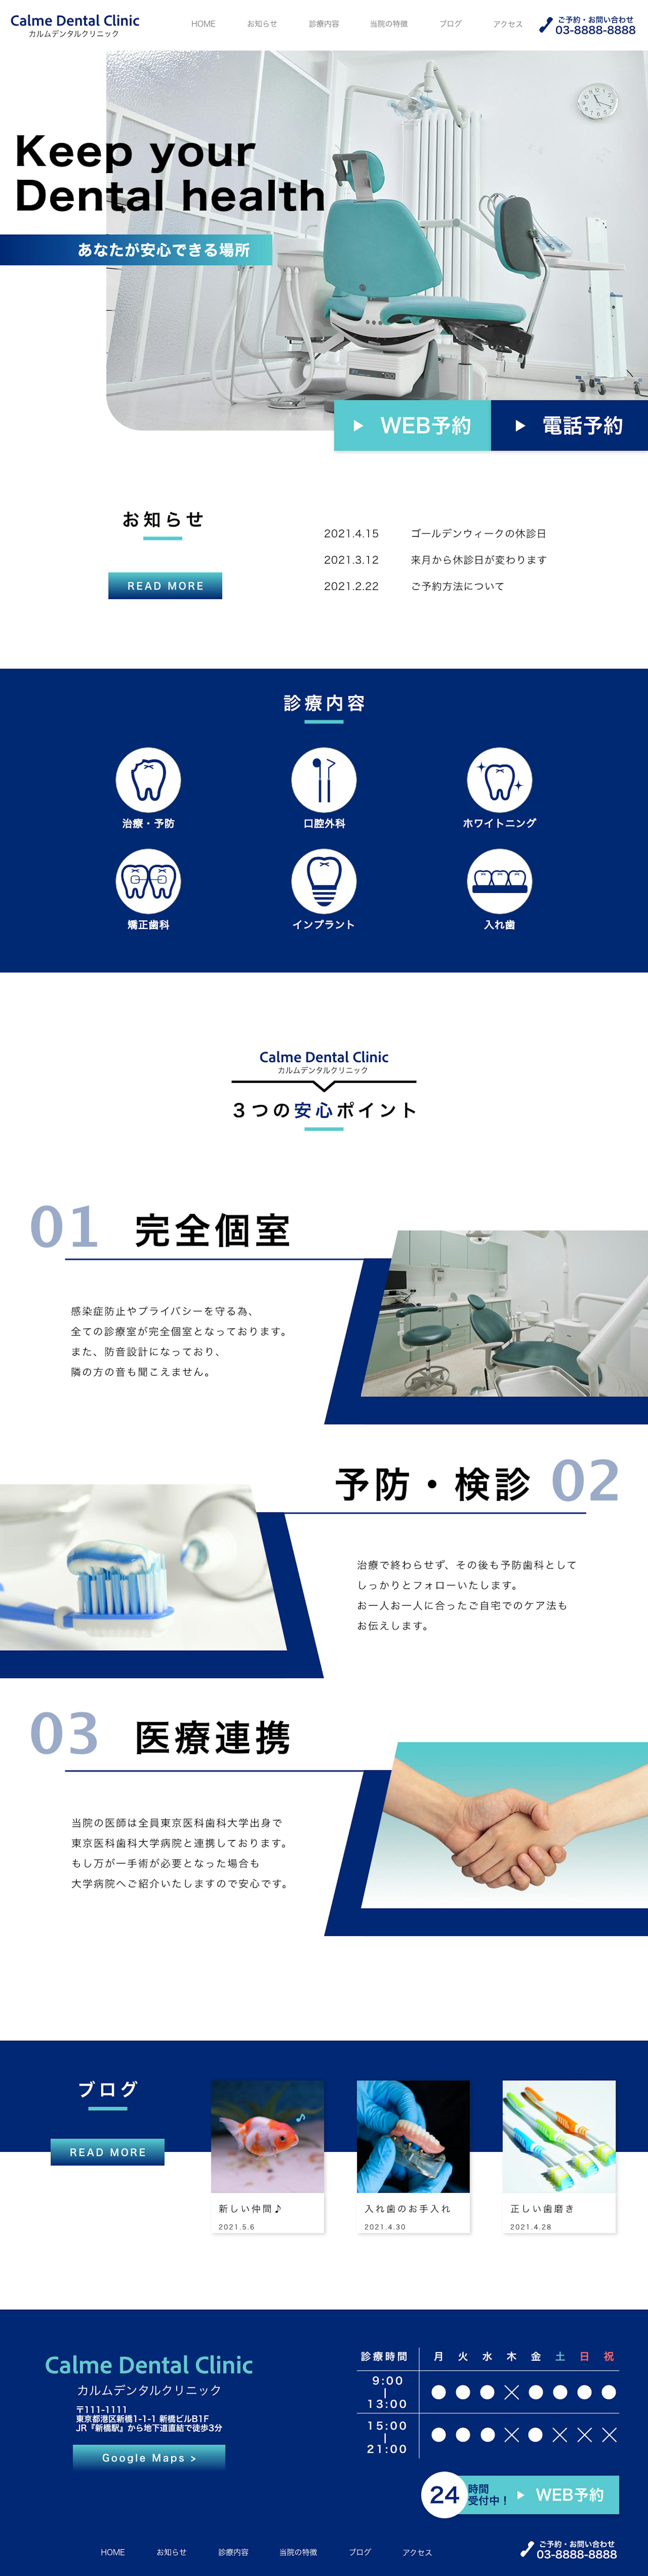 CalmDentalClinic(歯科クリニック)-1